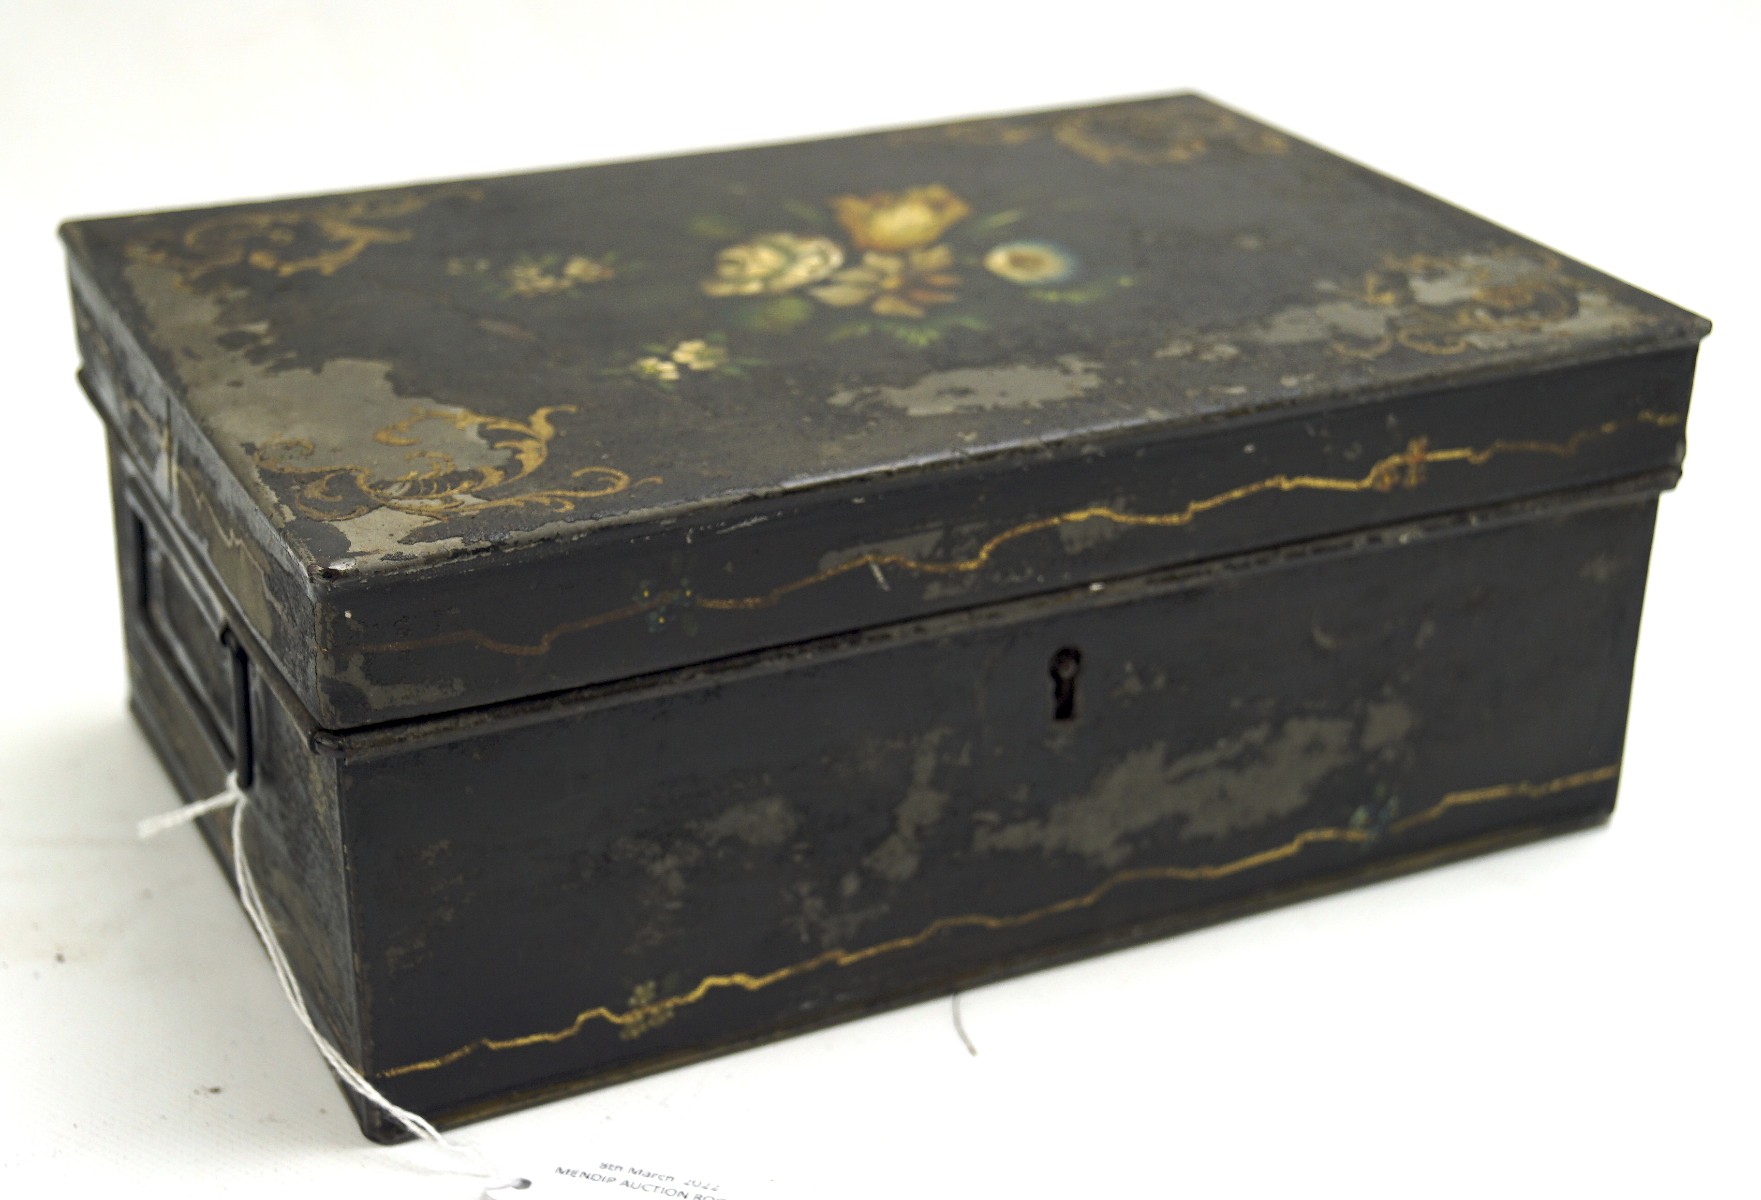 An unusual painted metal money storage box,